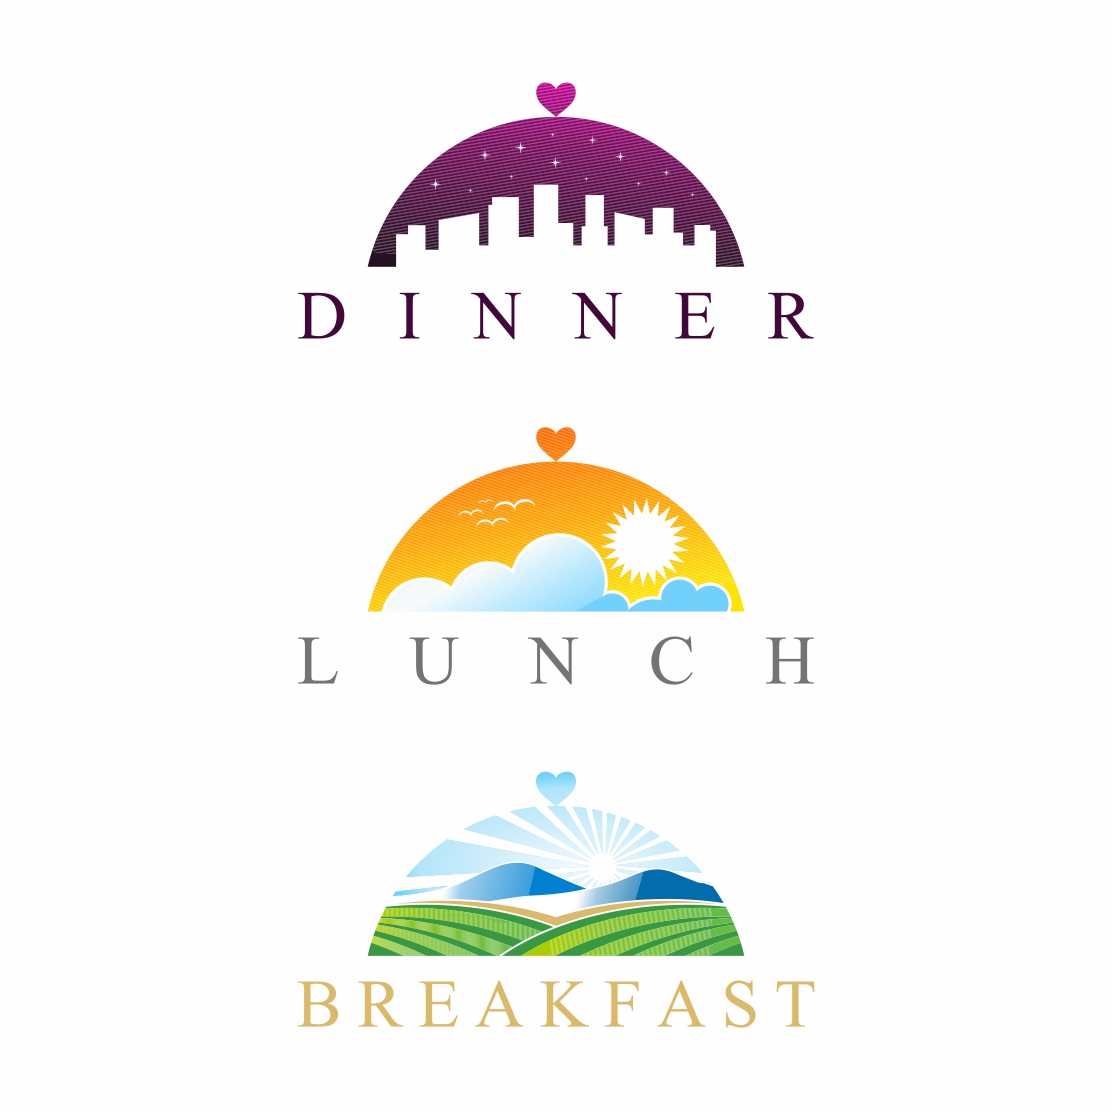 Restaurant dish logo design vector illustration - only 8$ preview image.